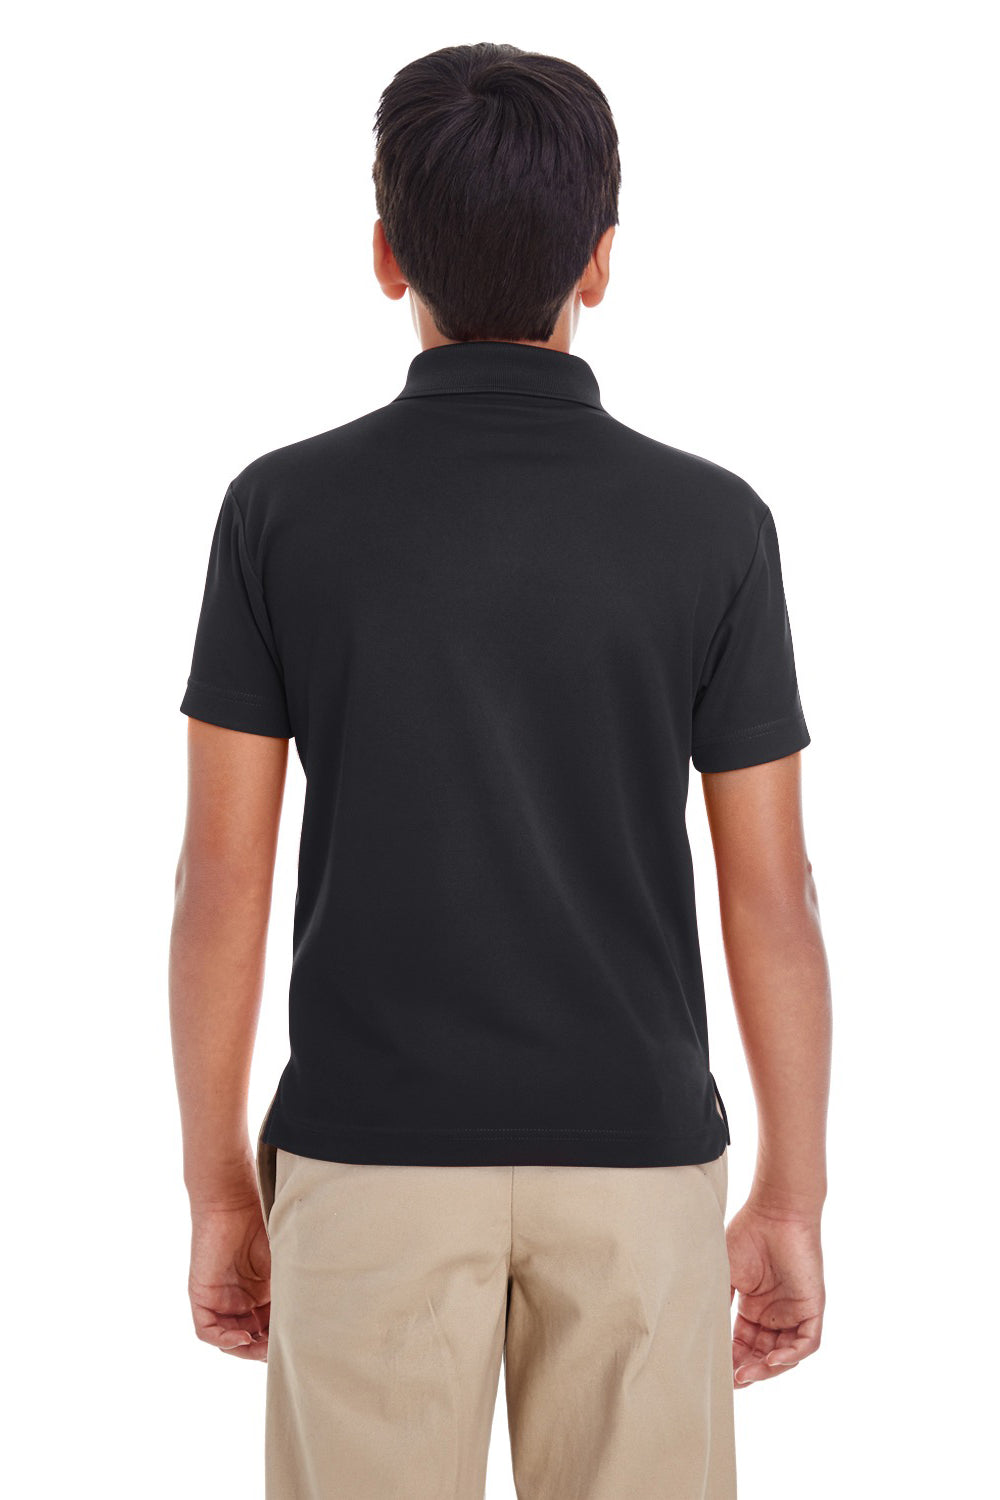 Core 365 88181Y Youth Origin Performance Moisture Wicking Short Sleeve Polo Shirt Black Back